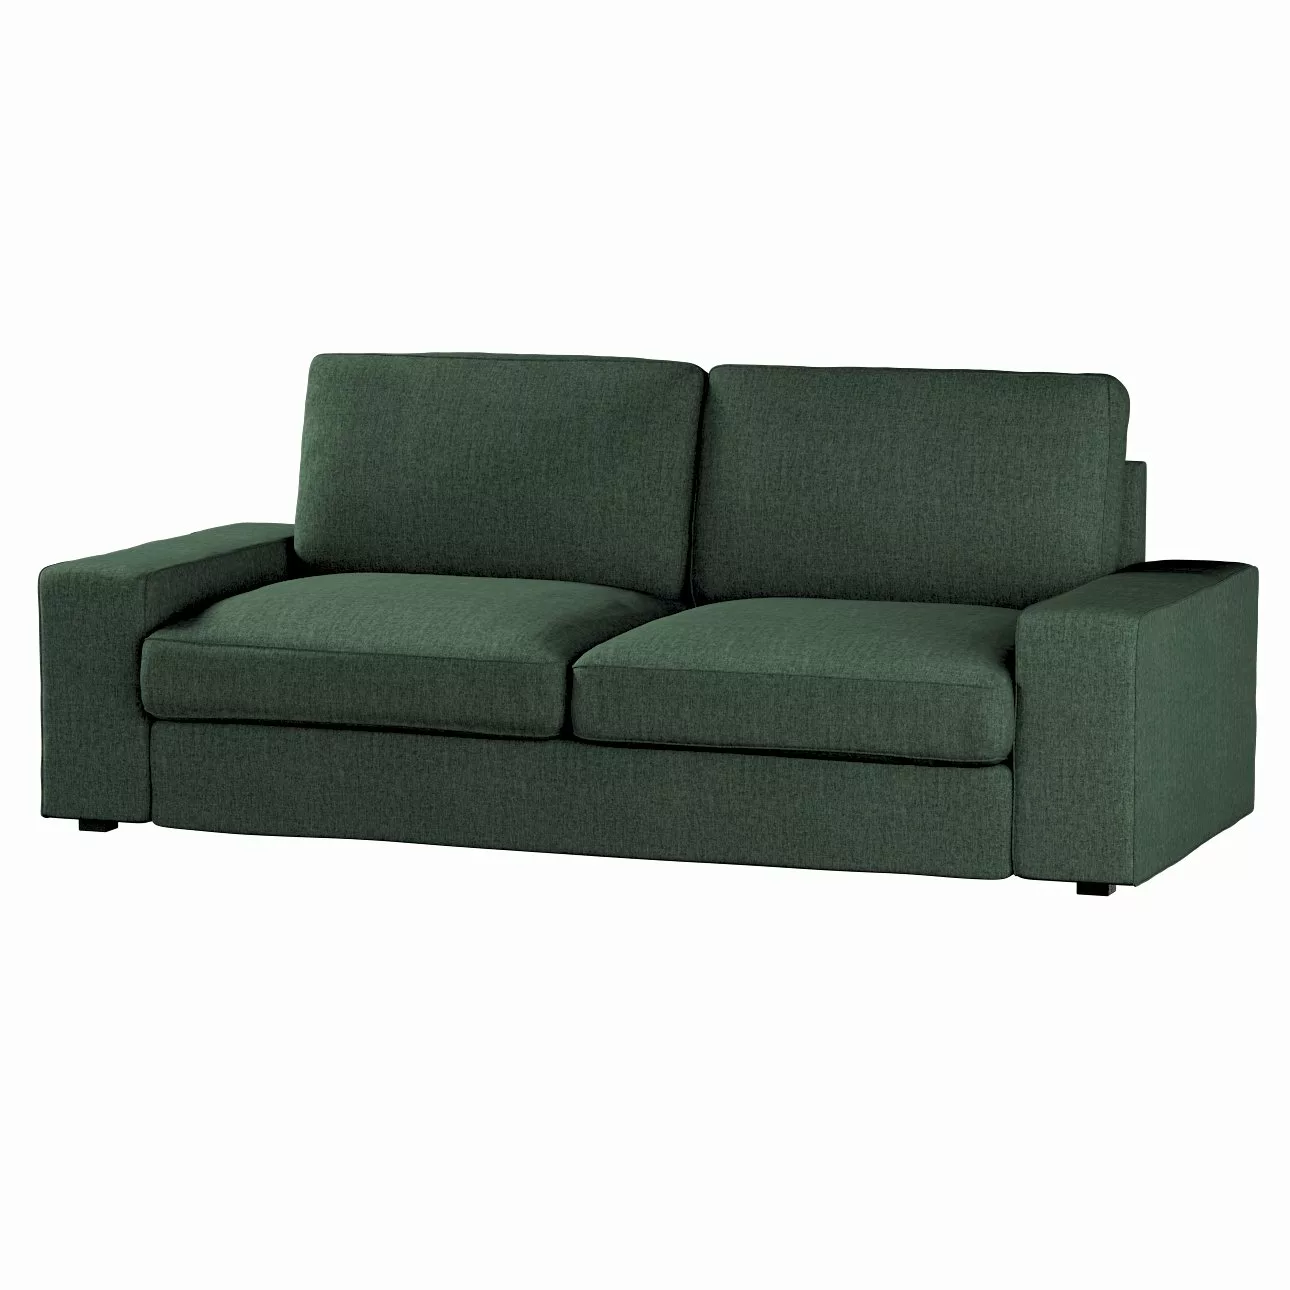 Bezug für Kivik 3-Sitzer Sofa, dunkelgrün, Bezug für Sofa Kivik 3-Sitzer, C günstig online kaufen